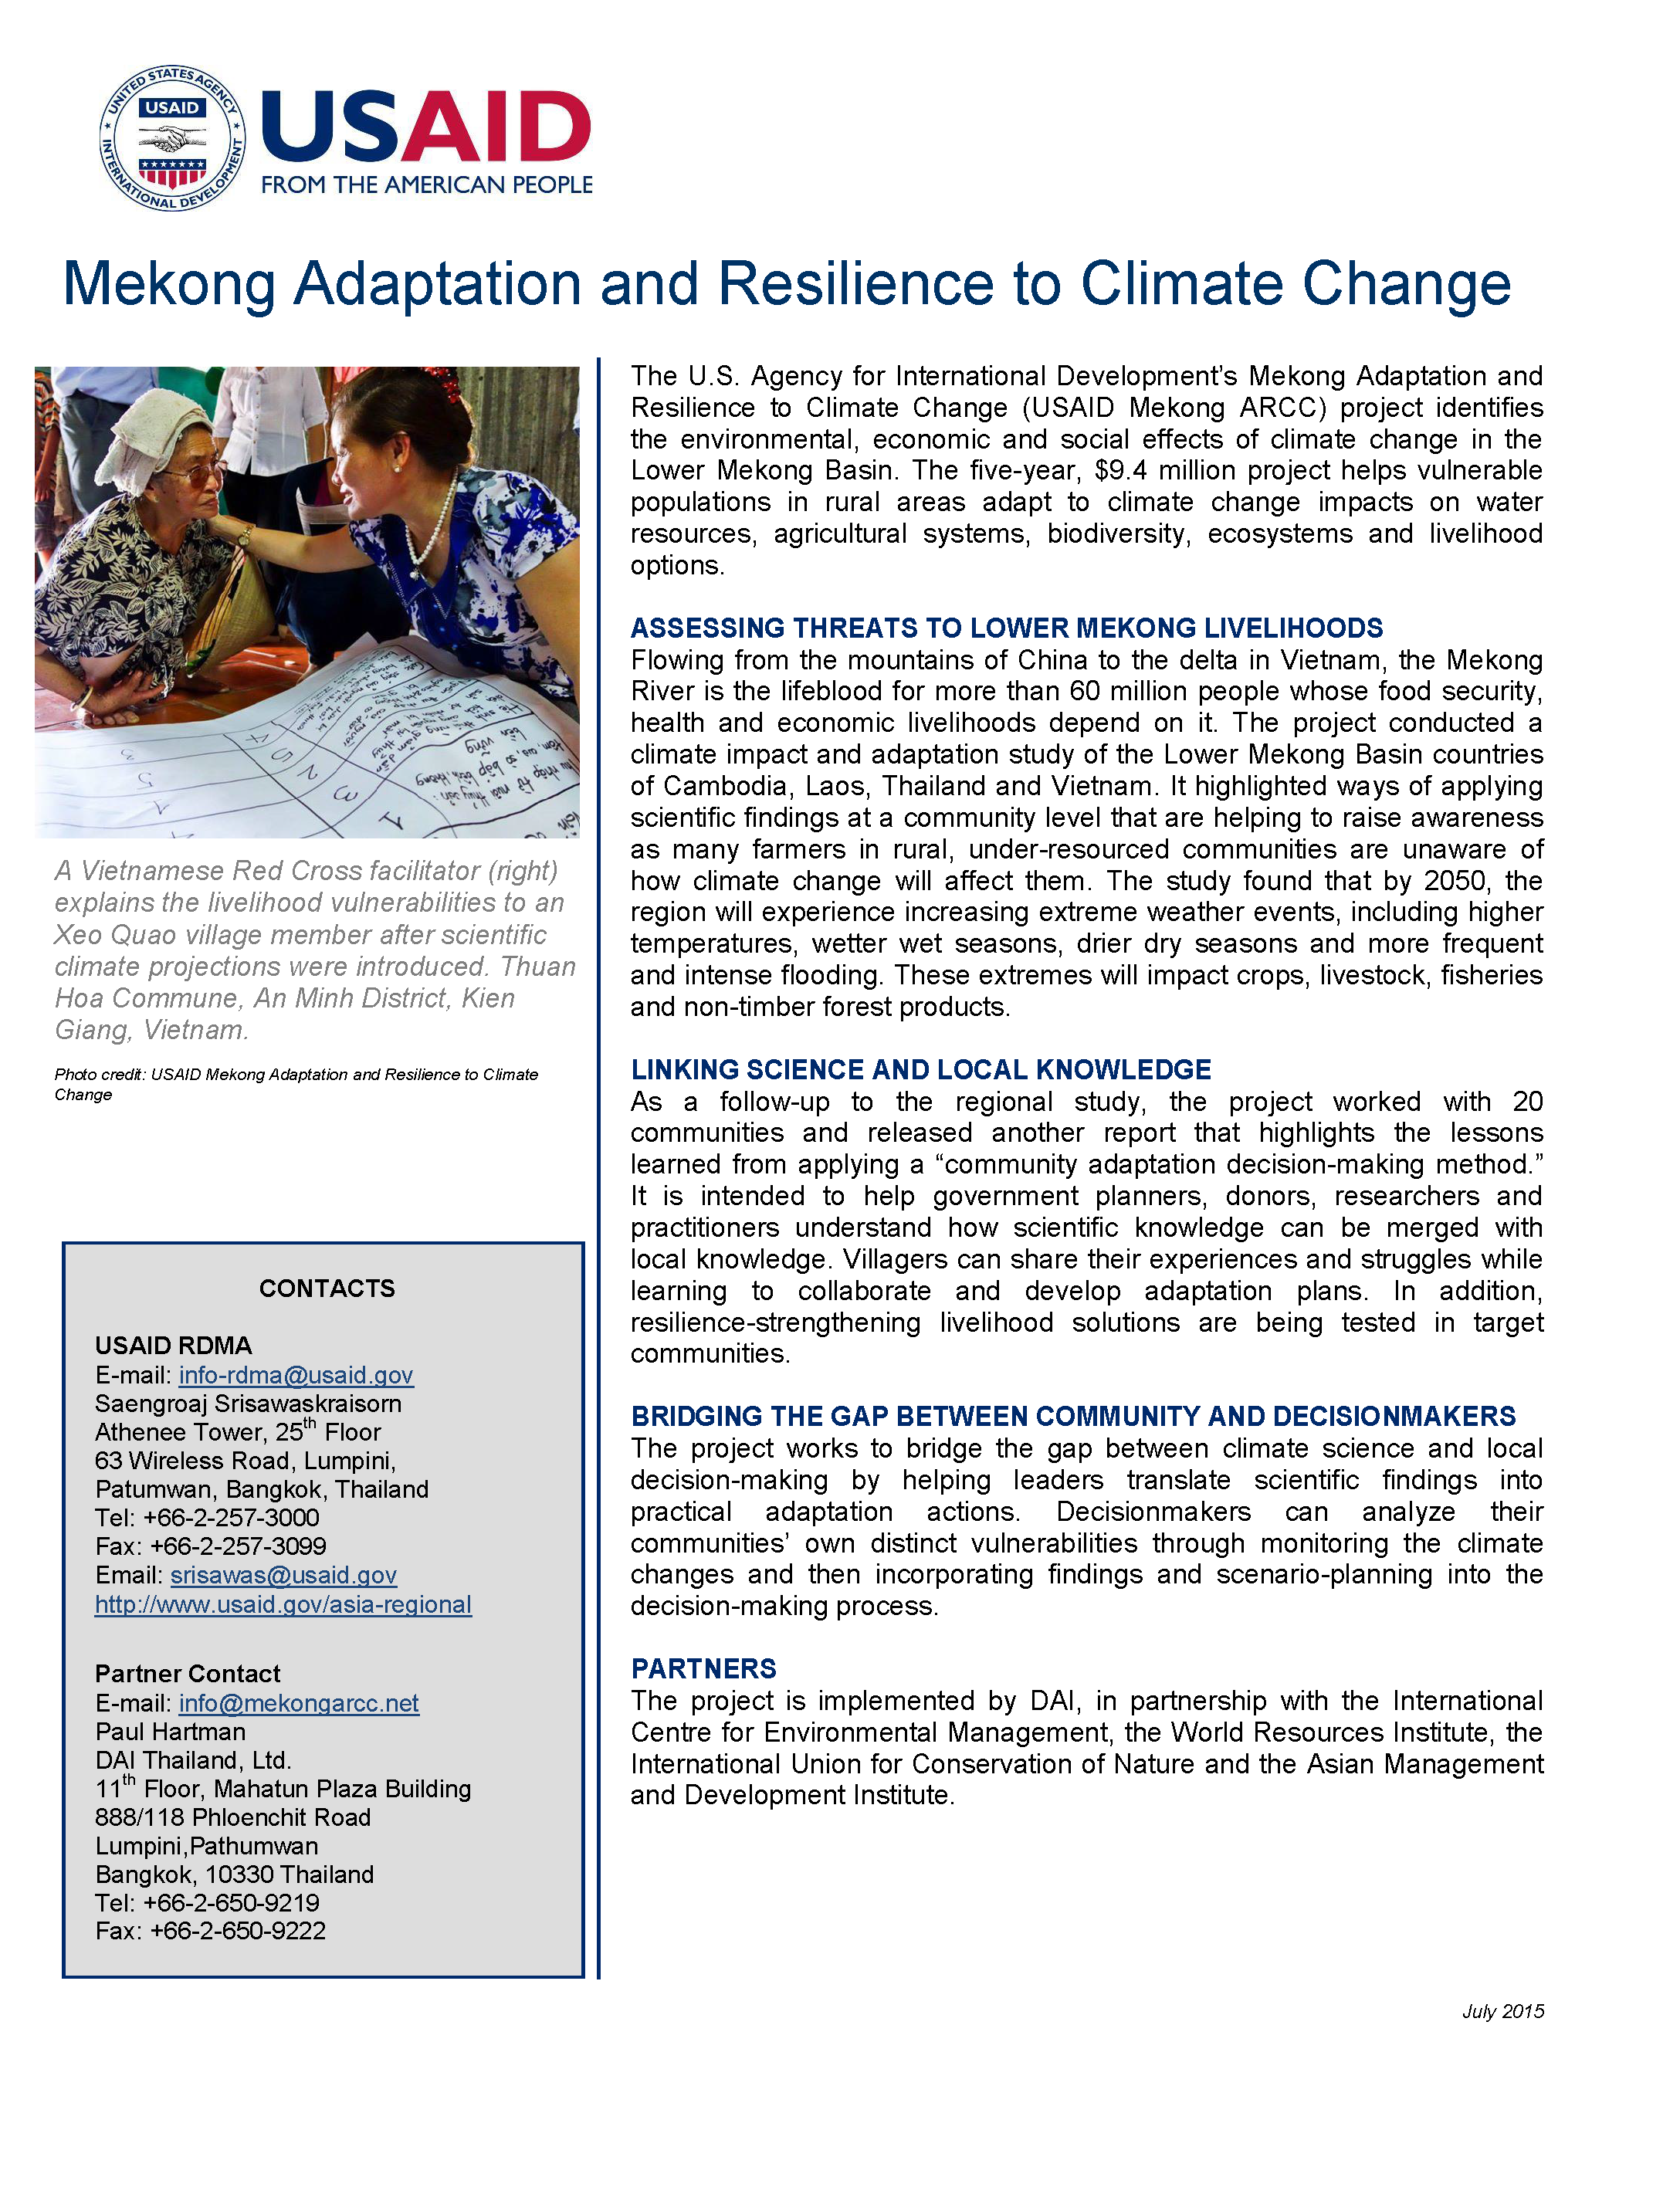 Mekong Adaptation and Resilience to Climate Change (Mekong ARCC)